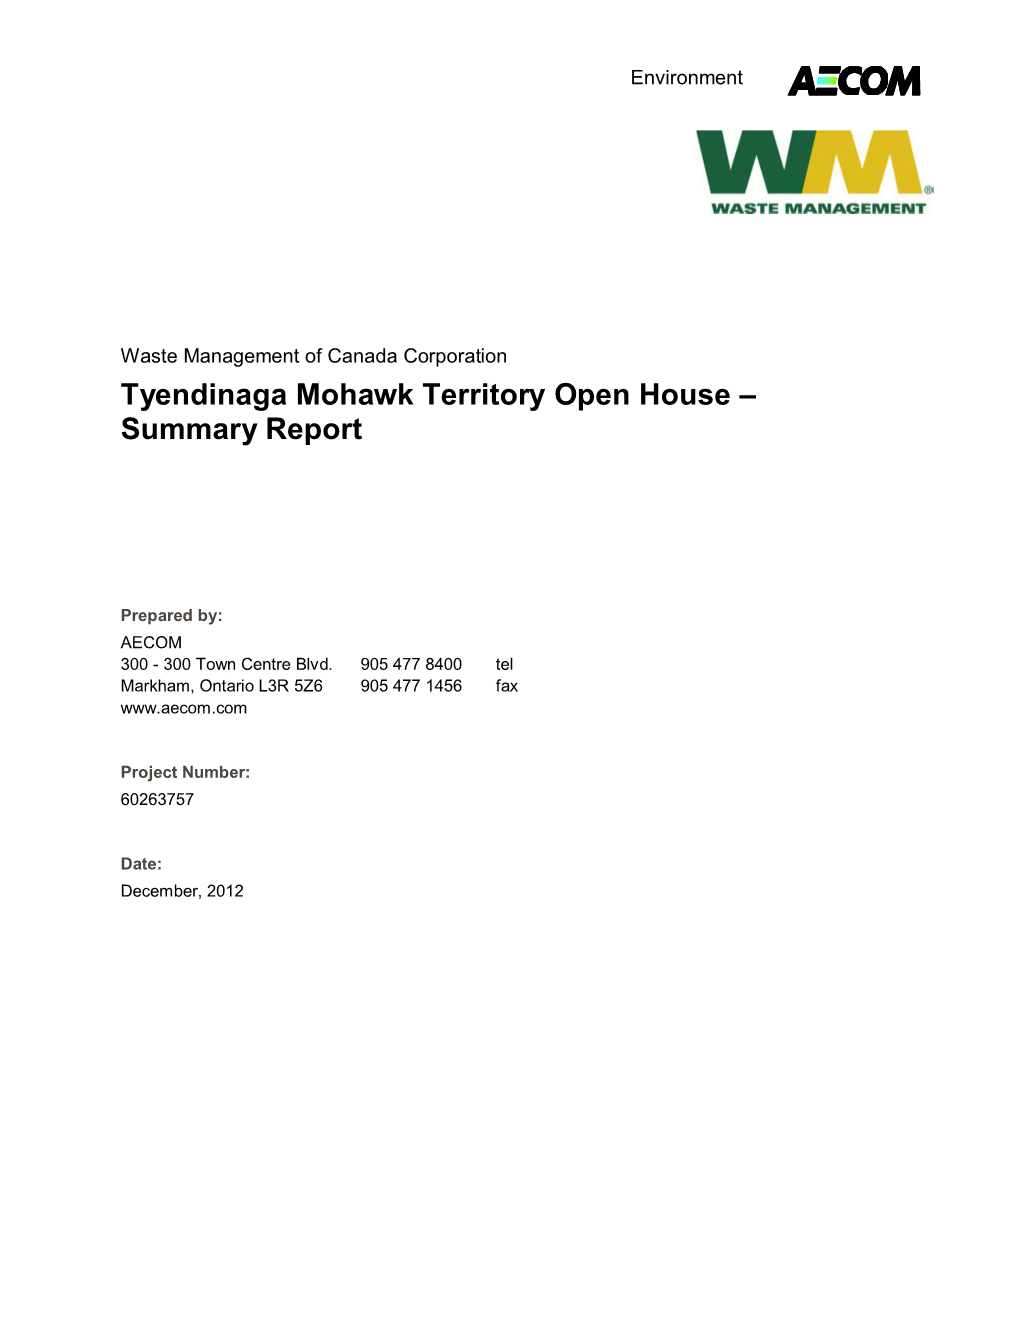 Tyendinaga Mohawk Territory Open House – Summary Report